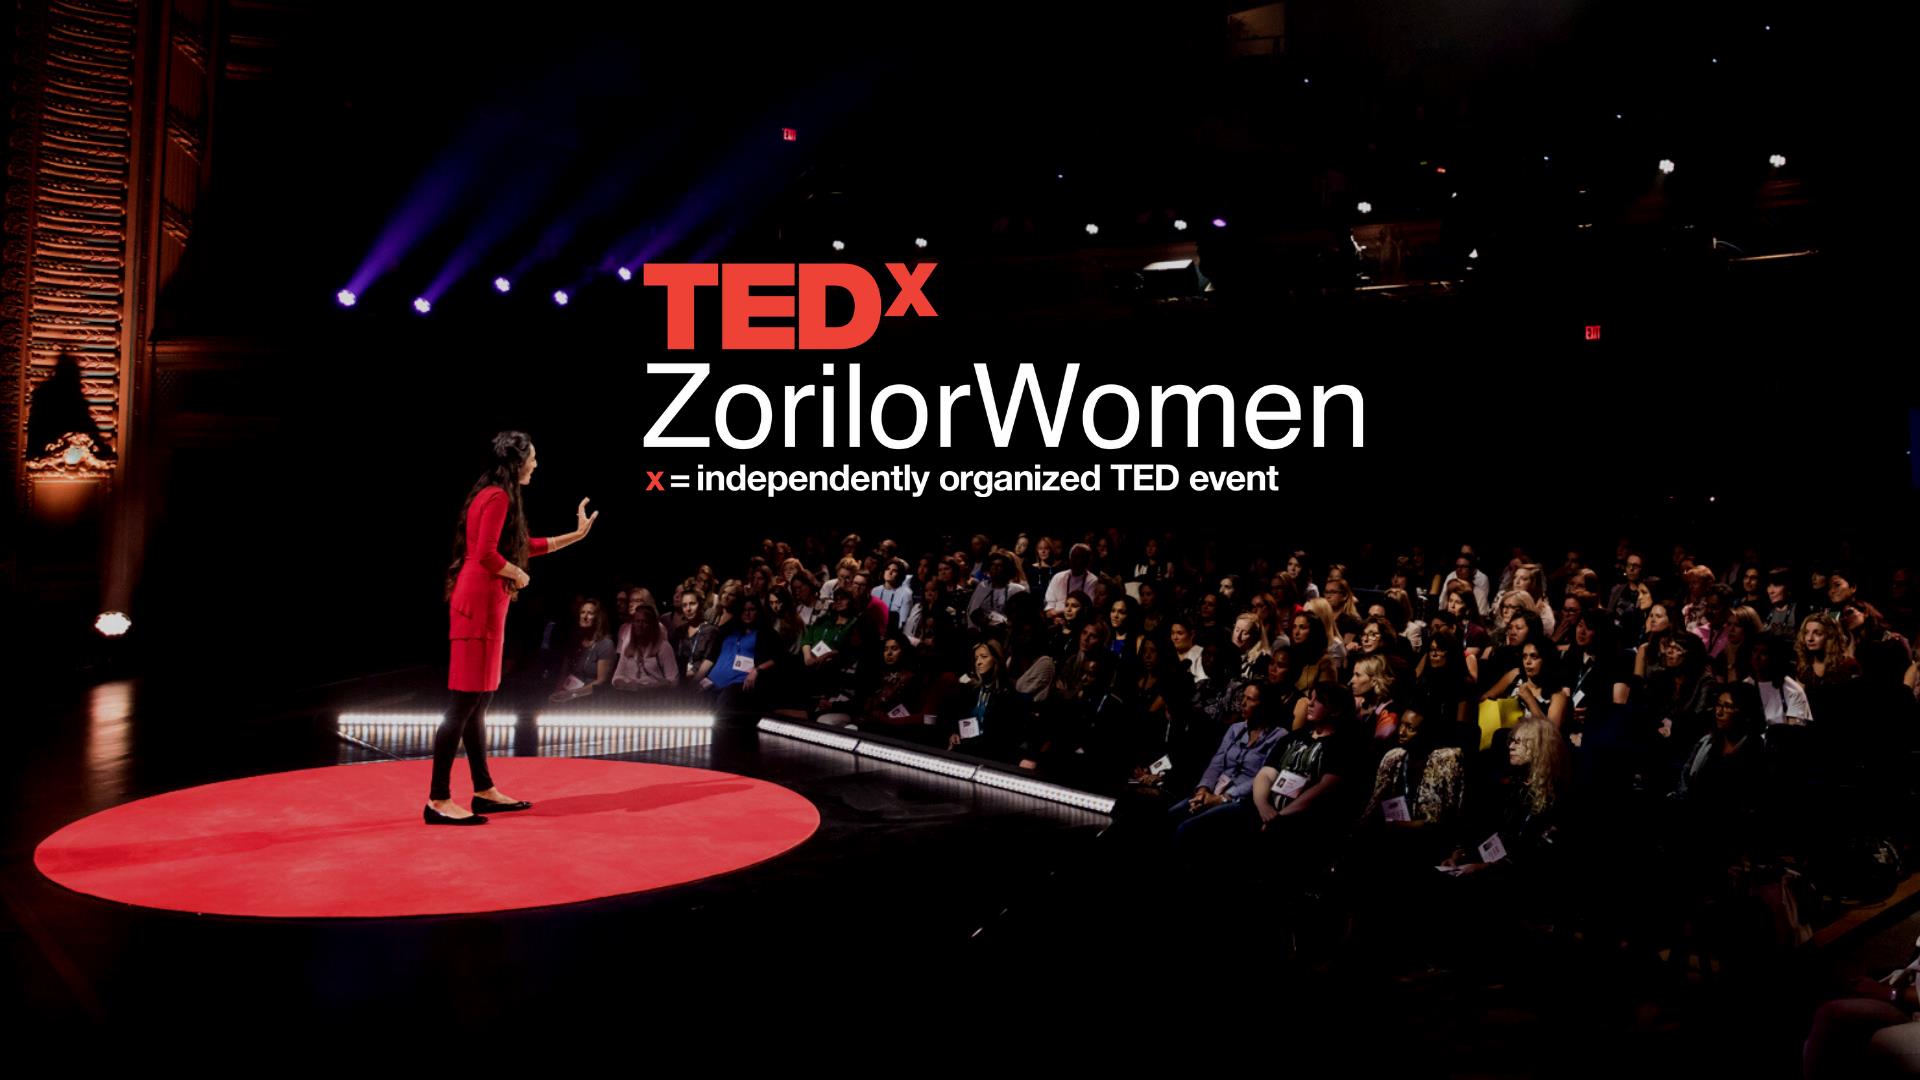 Conferința online la care participi gratuit dacă ai donat sânge TEDxZorilorWomen 2020 Fearless e exclusiv online